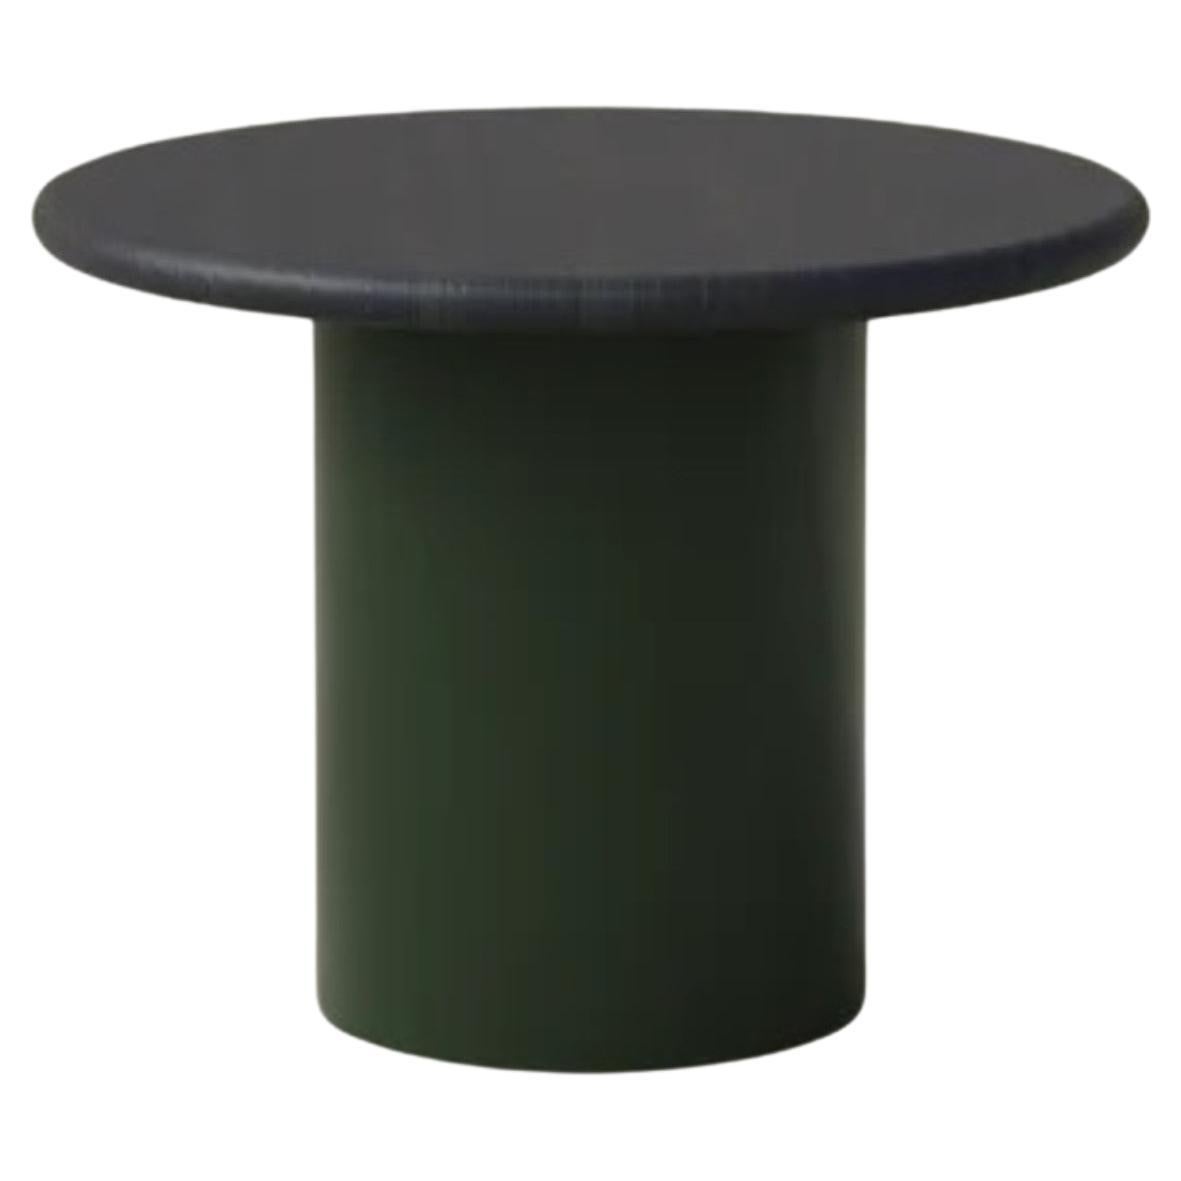 Raindrop Coffee Table, 500, Black Oak / Moss Green For Sale